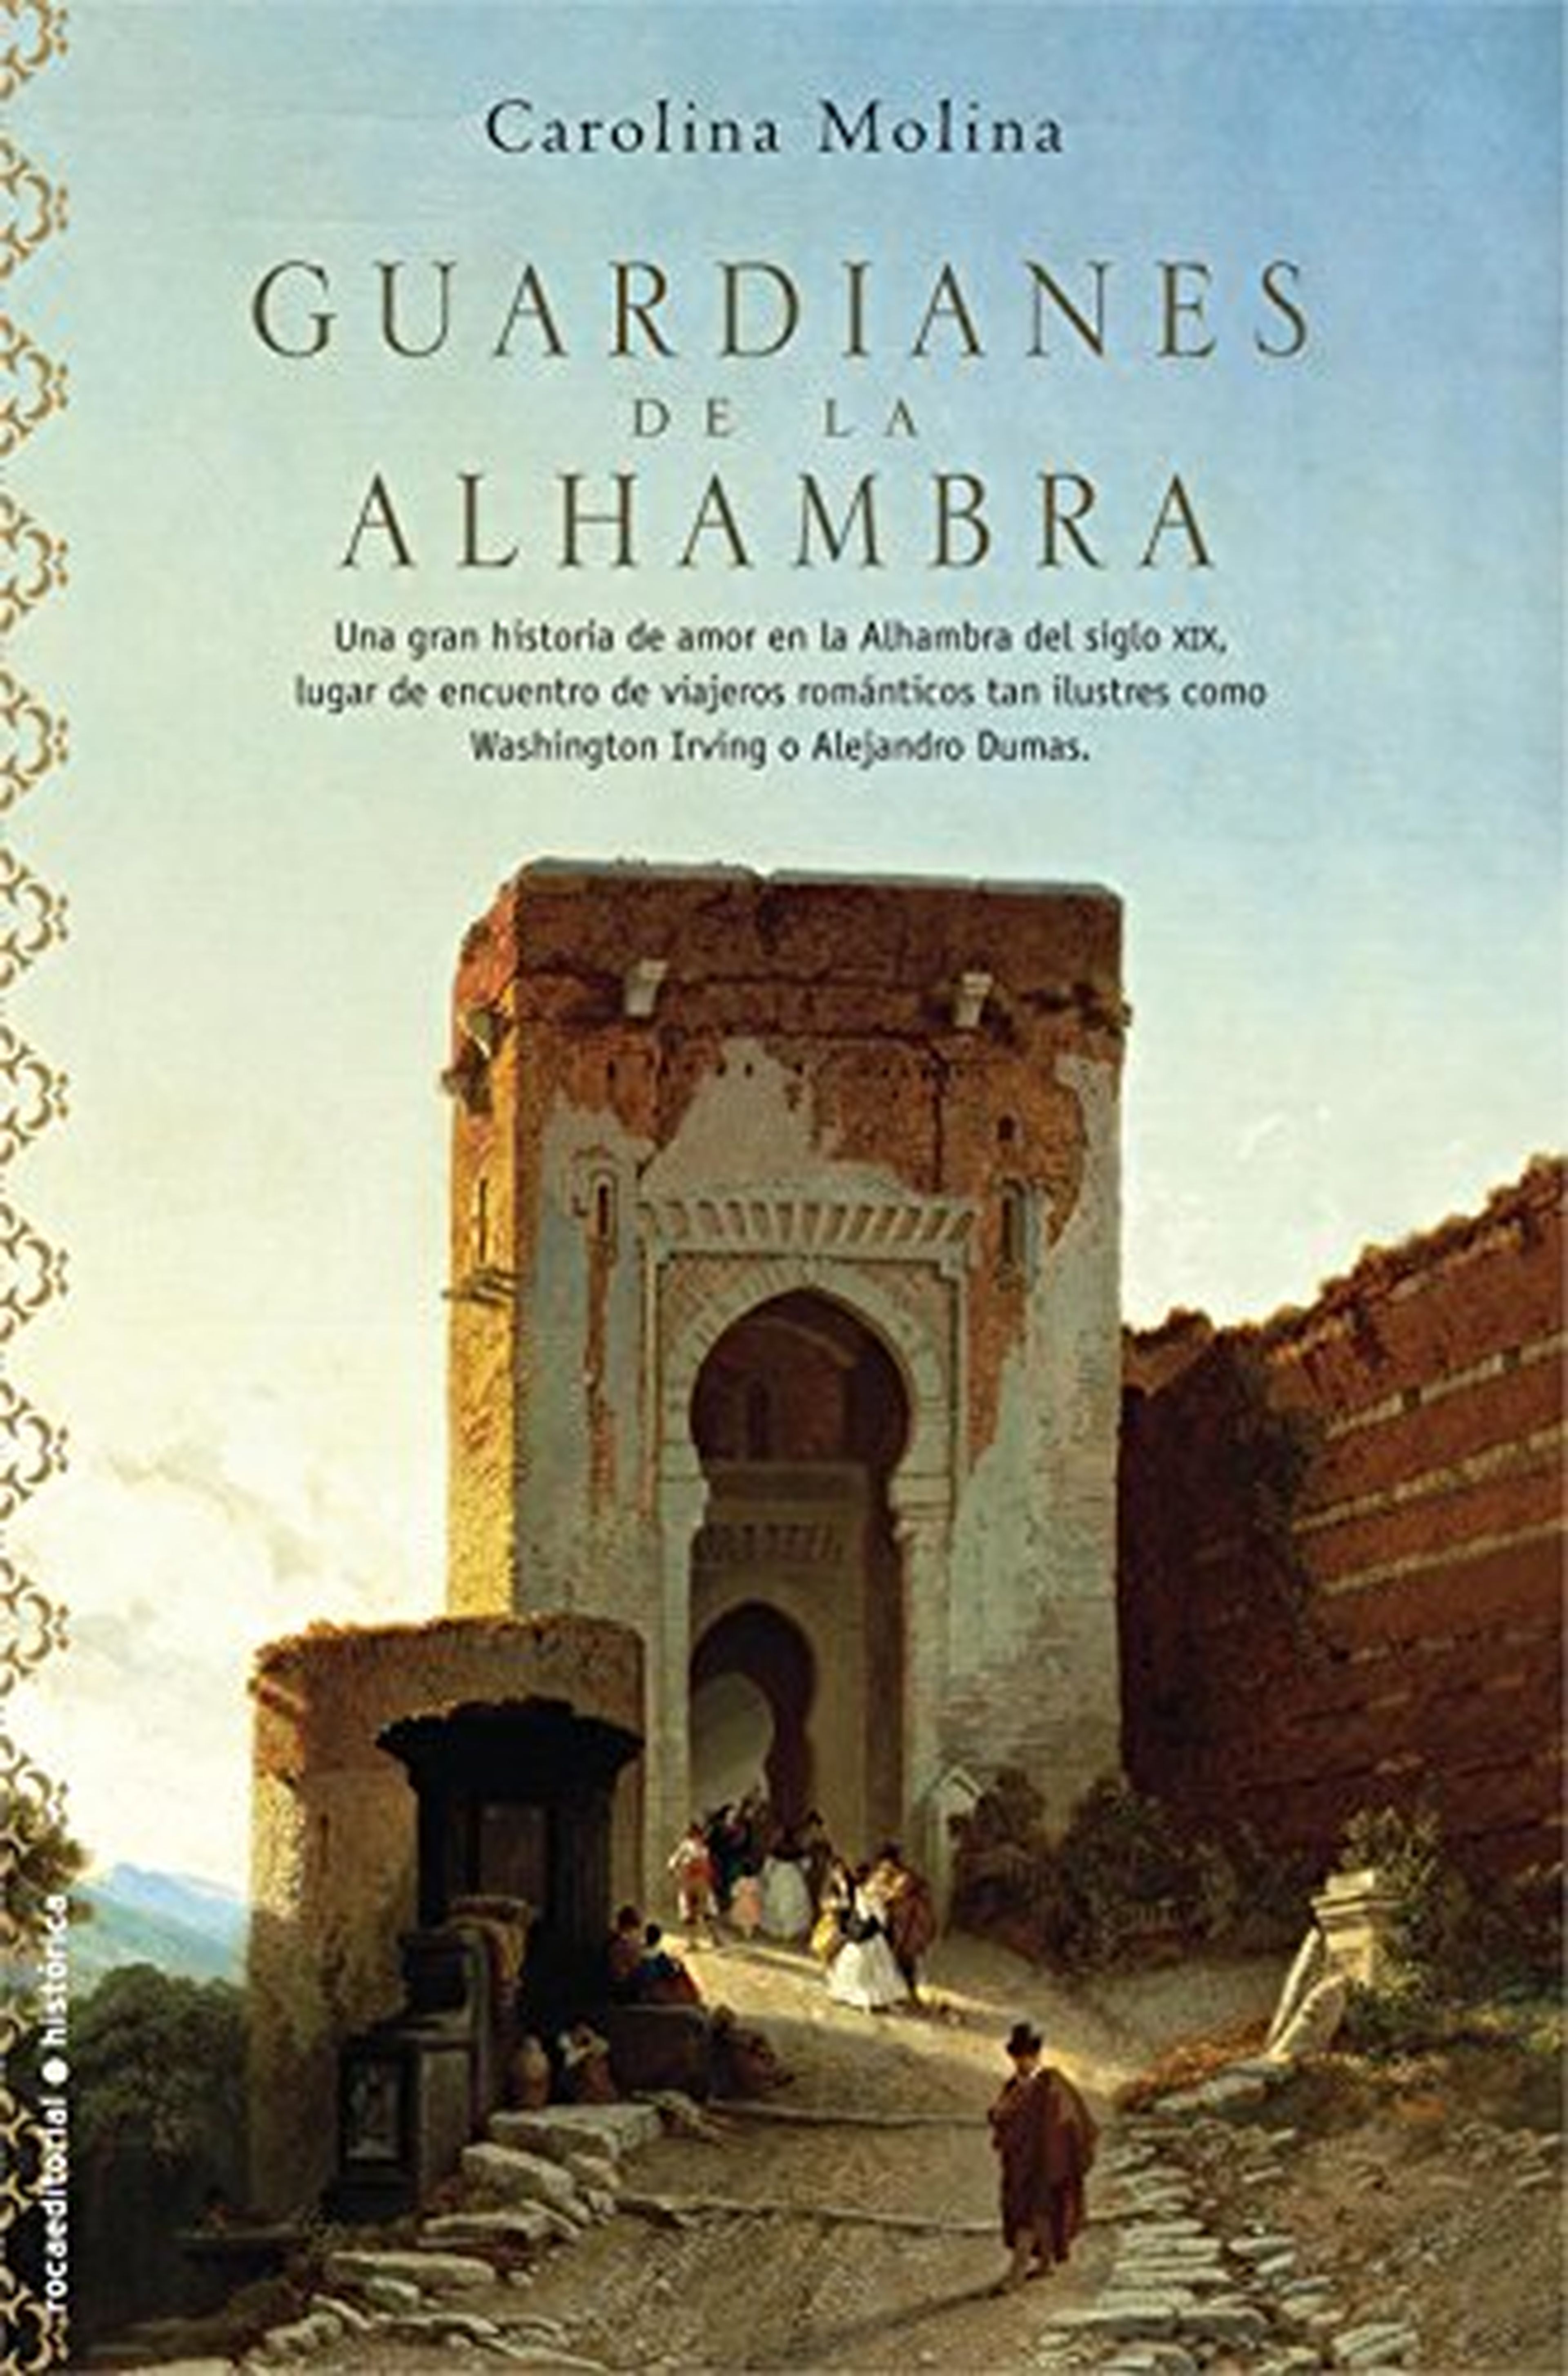 Guardianes de la Alhambra